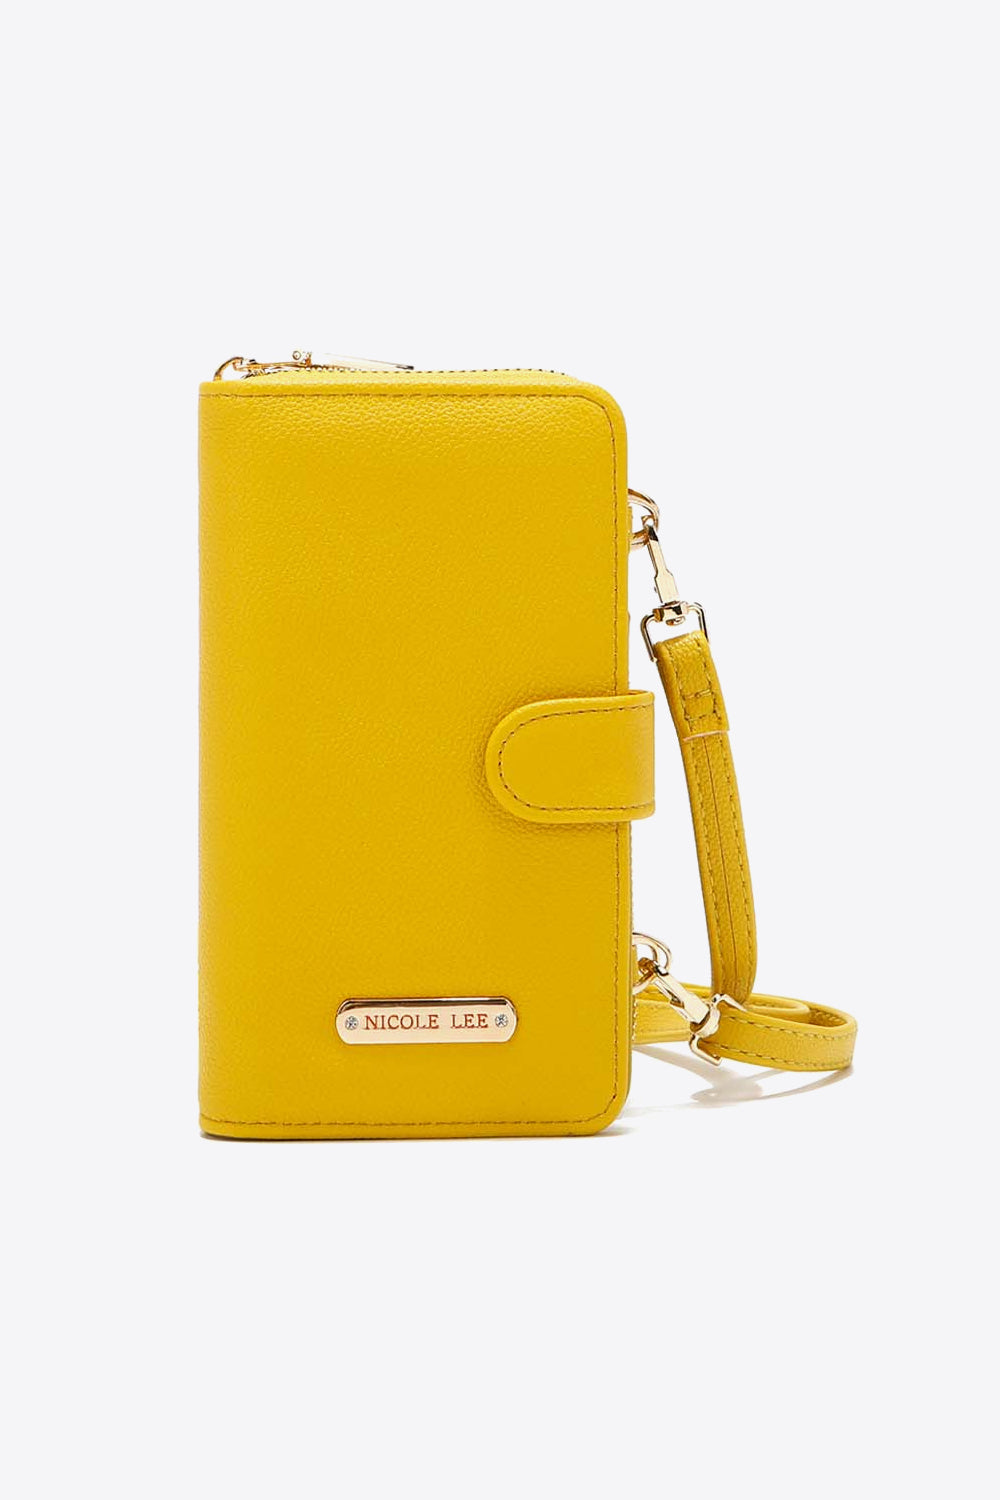 Nicole Lee USA Two-Piece Crossbody Phone Case Wallet - Tigbul's Fashion